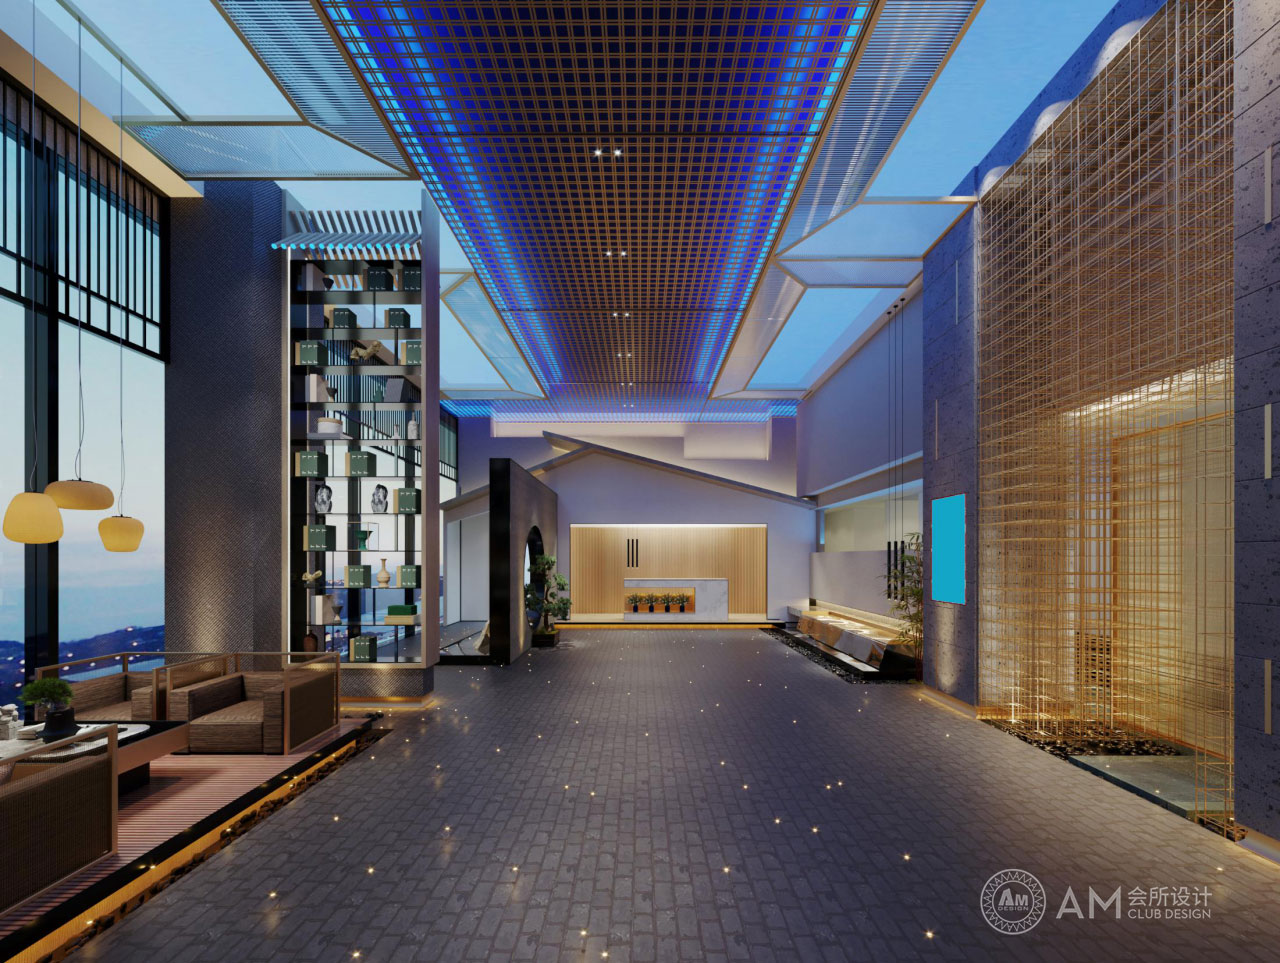 AM DESIGN | Hall design of spa club in Sijihuacheng